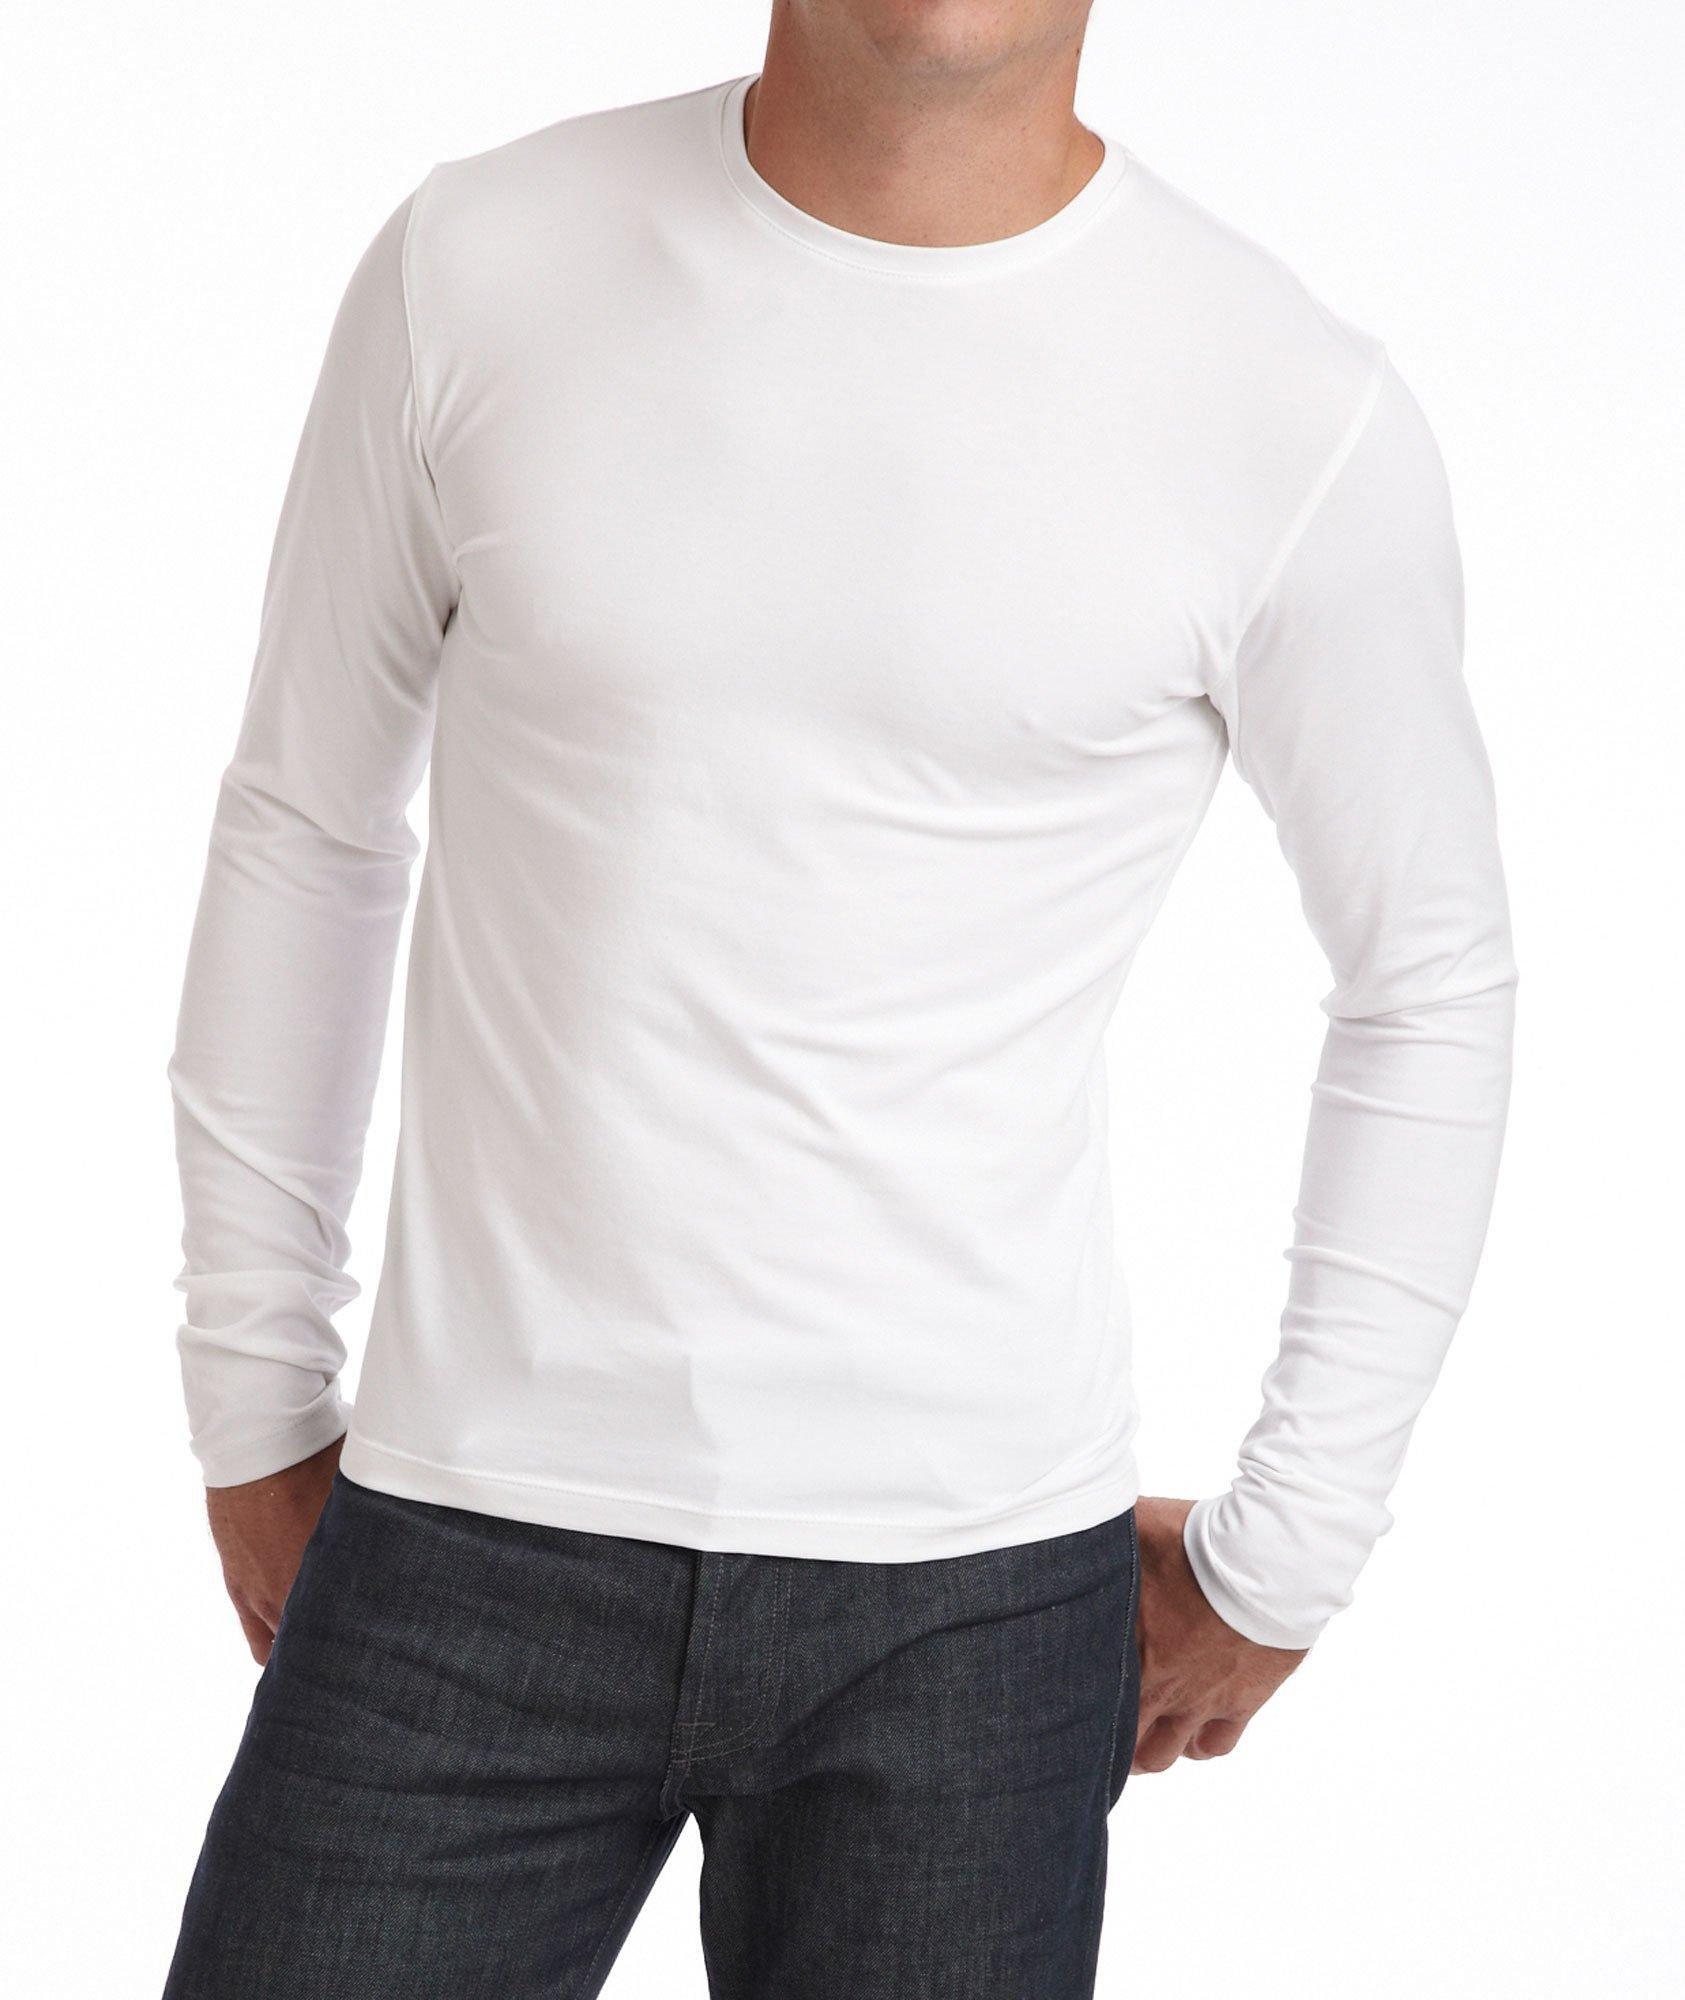 Stretch-Pima Cotton T-Shirt image 0